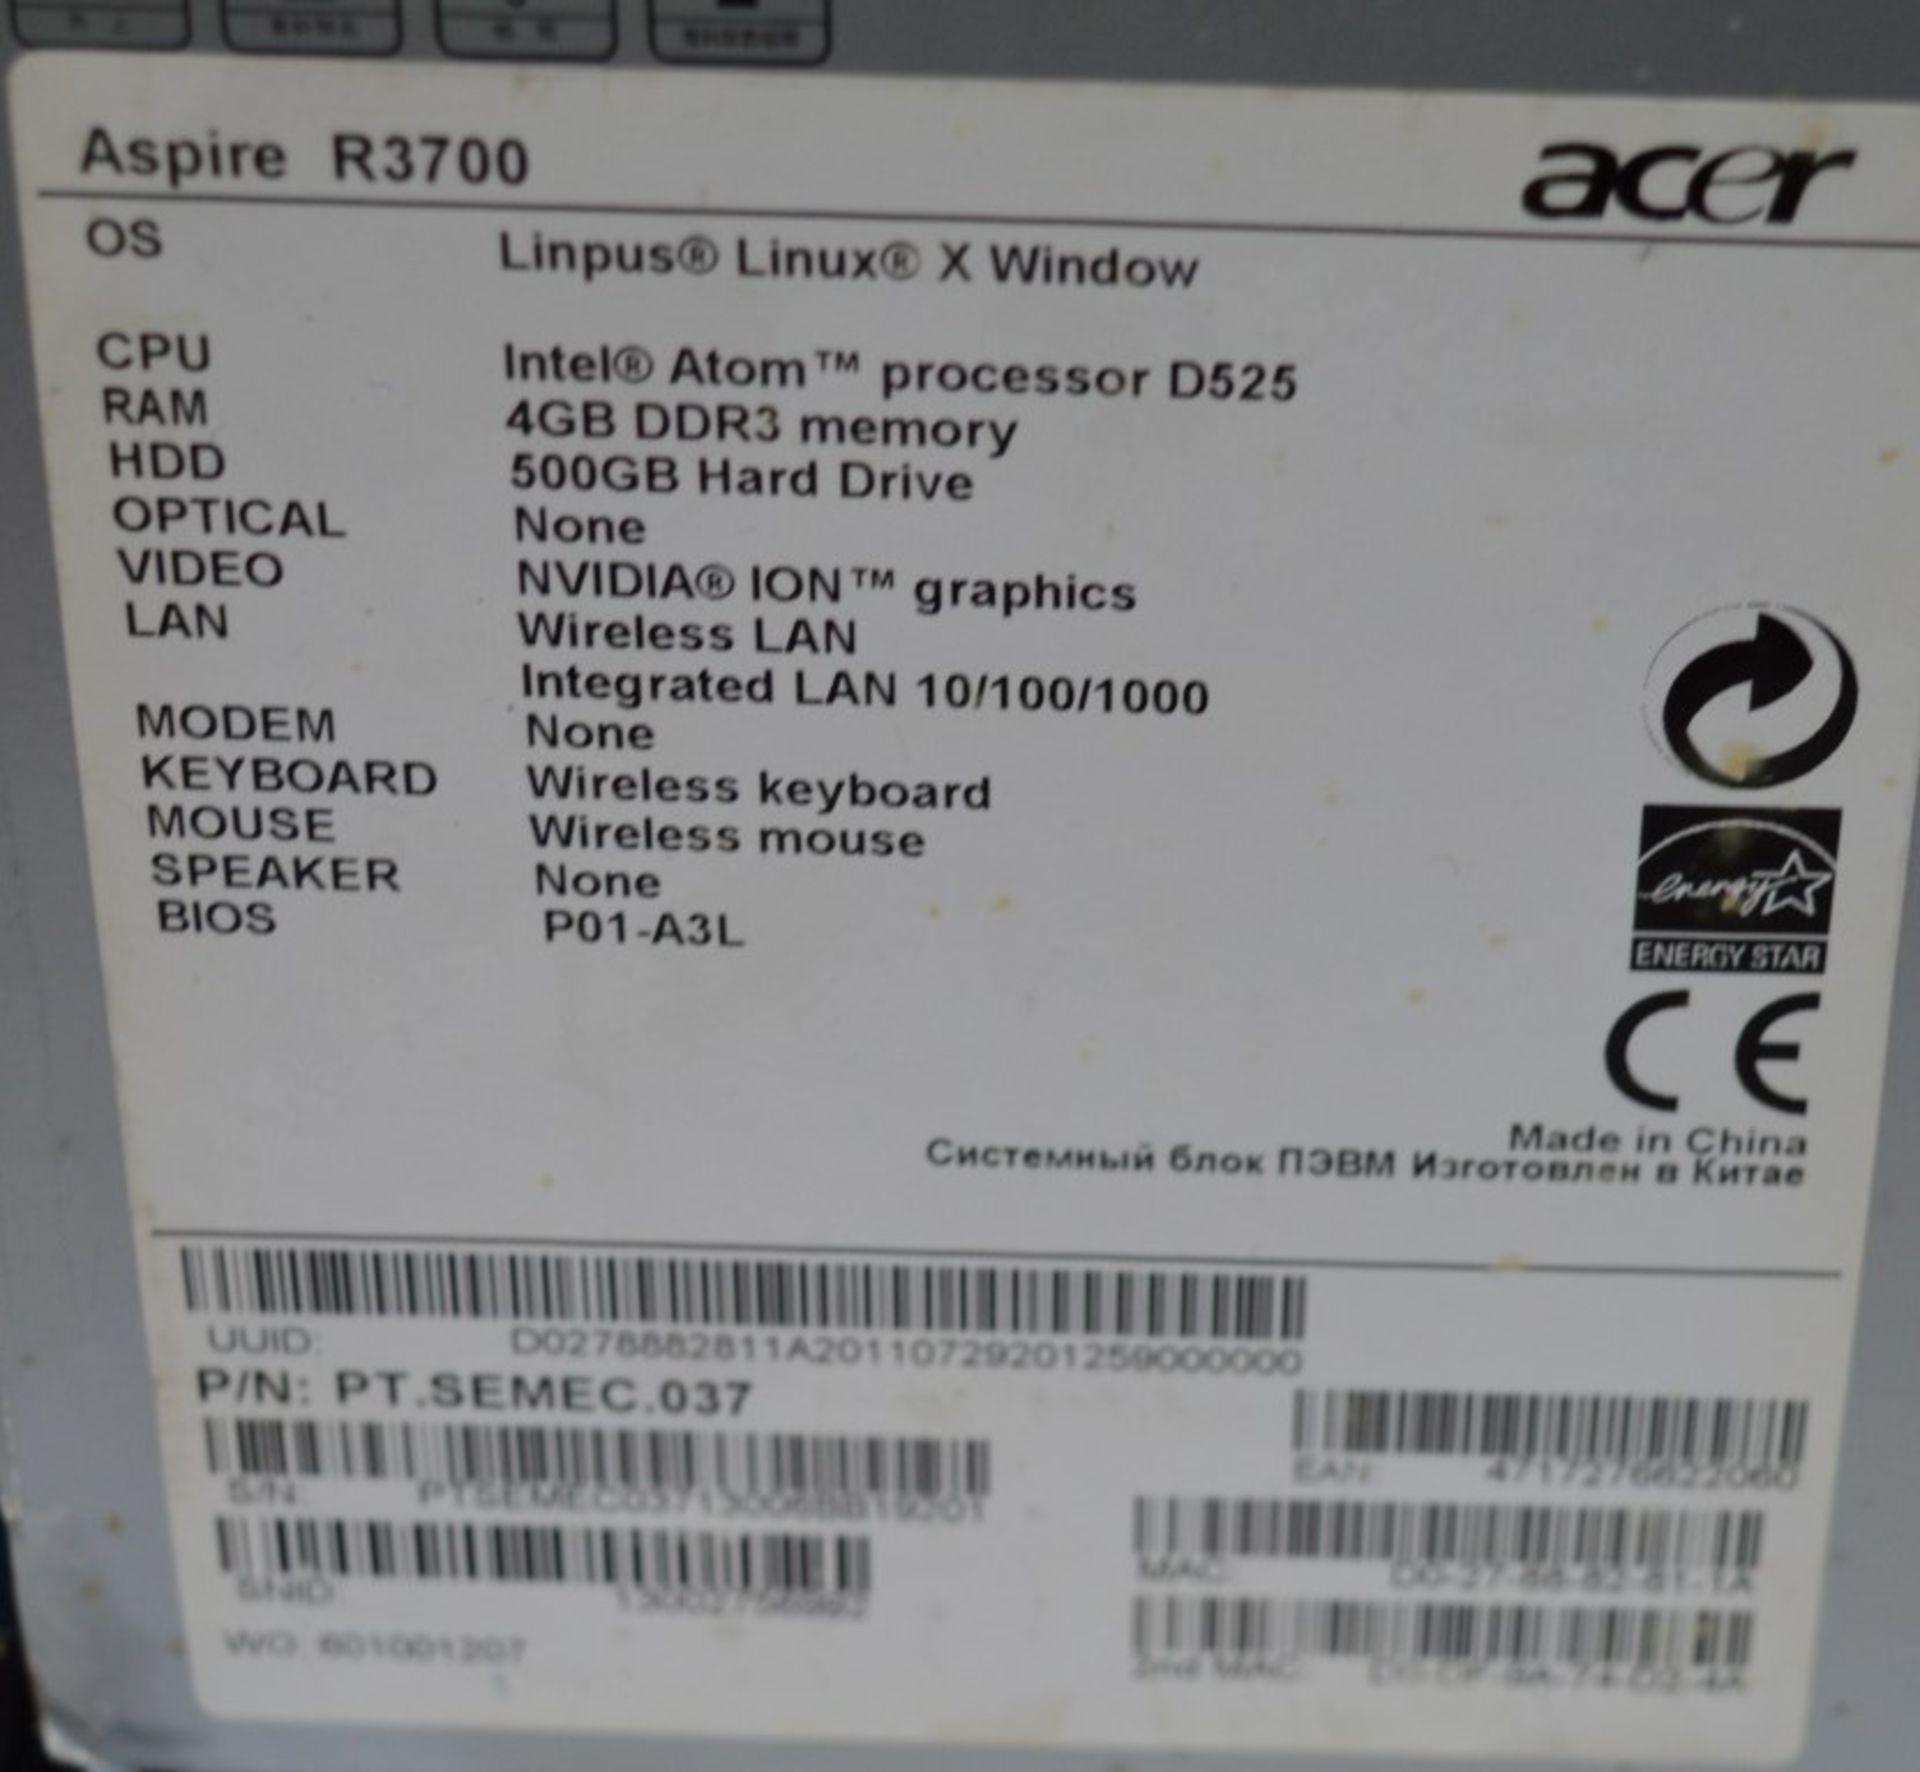 1 x Acer Aspire R3700 Ultra Small Form Factor Desktop Computer - Intel Atom Dual Core Processor, 4gb - Image 10 of 10